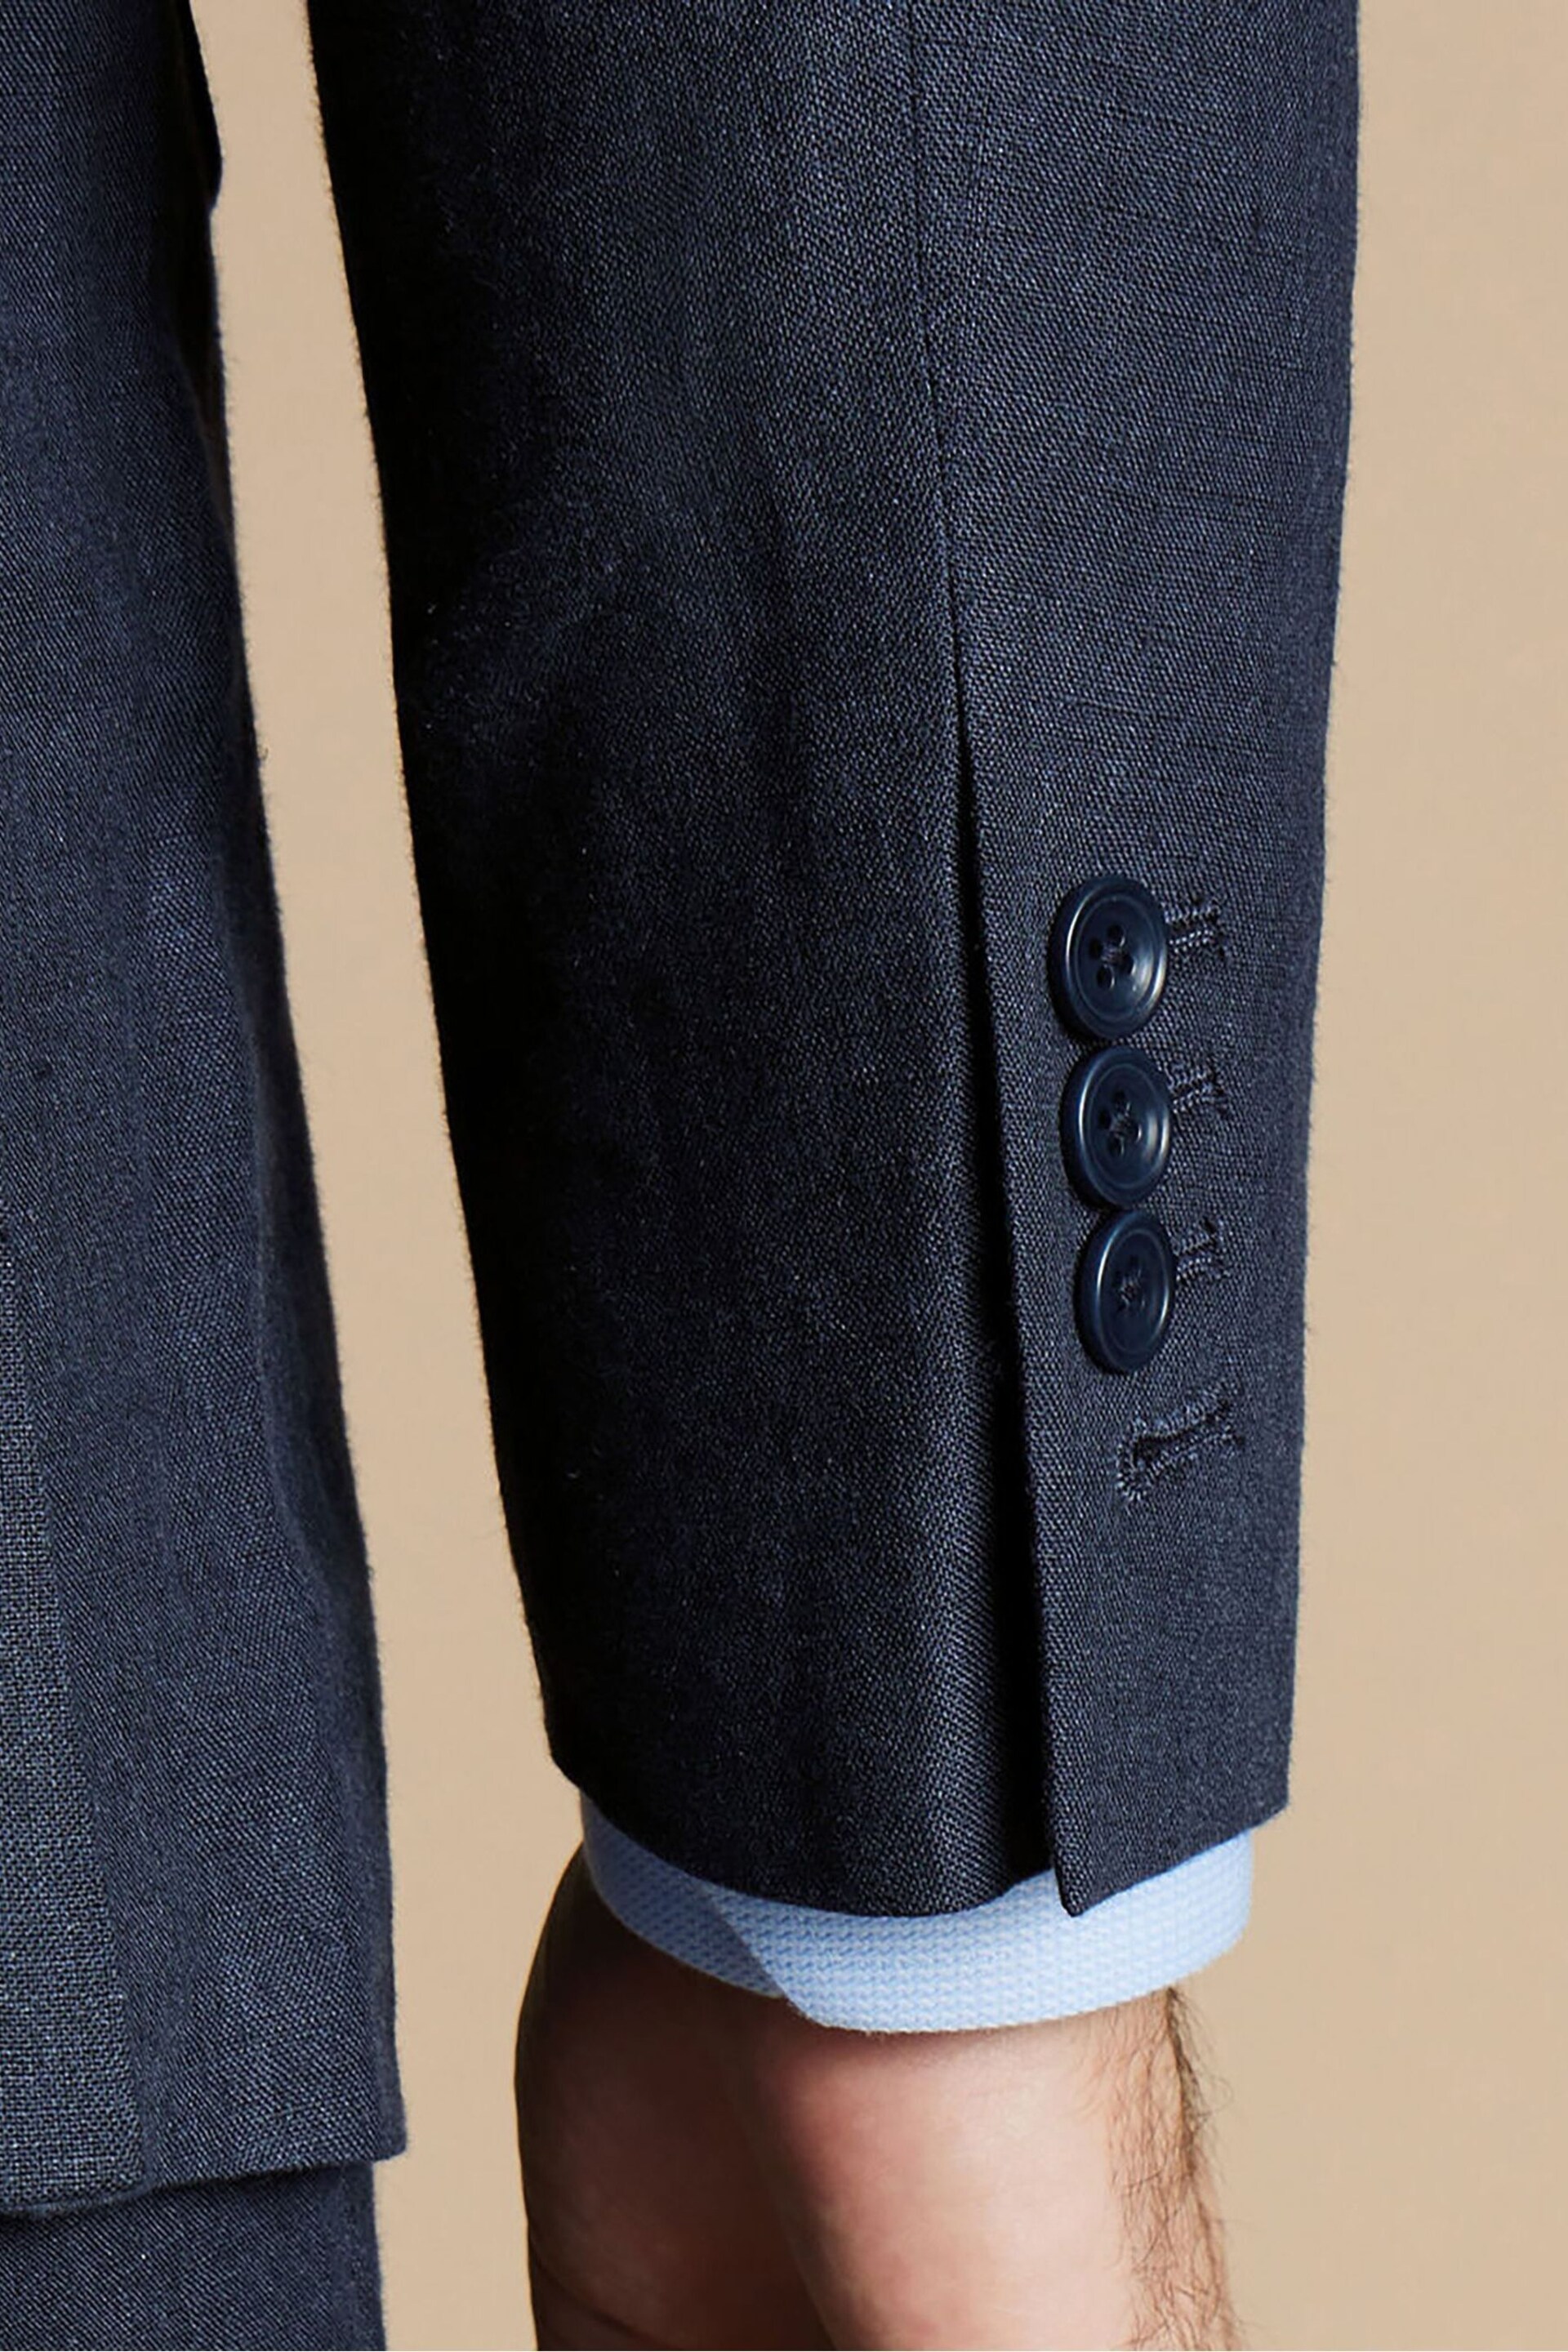 Charles Tyrwhitt Blue Linen Classic Fit Jacket - Image 4 of 5